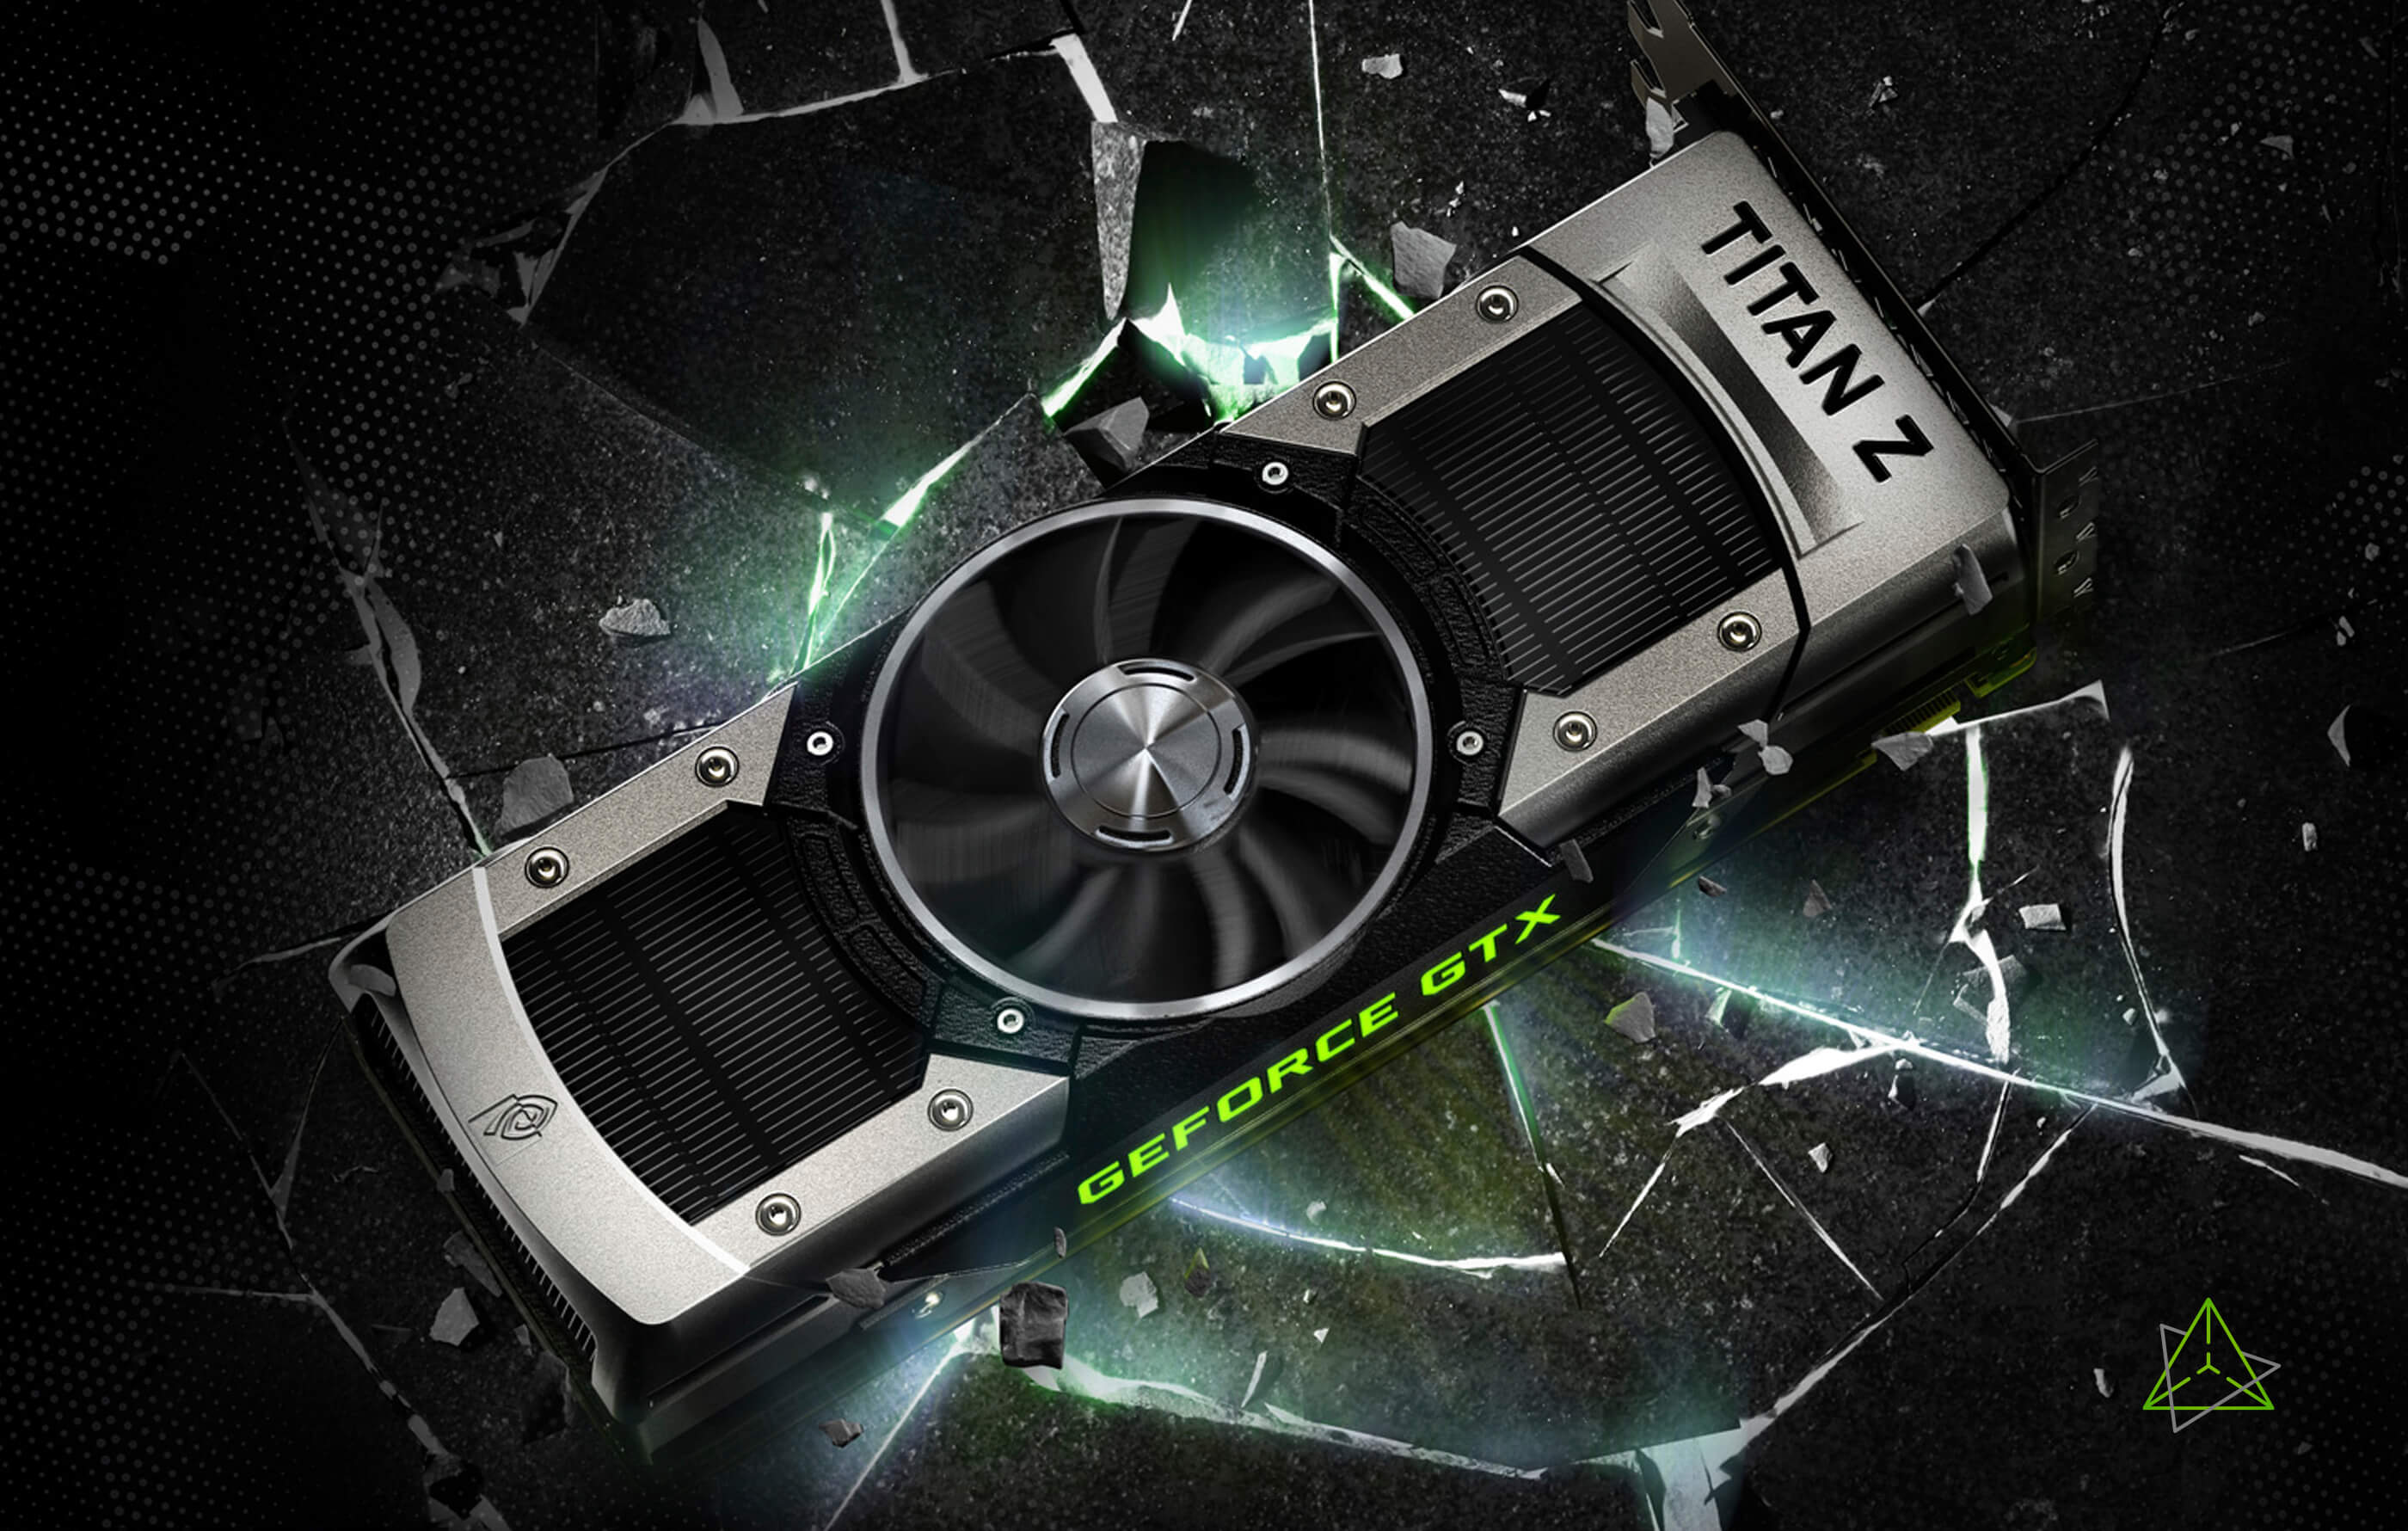 Full screen image of an Nvidia GeForce GTX Titan Z gaming graphics card